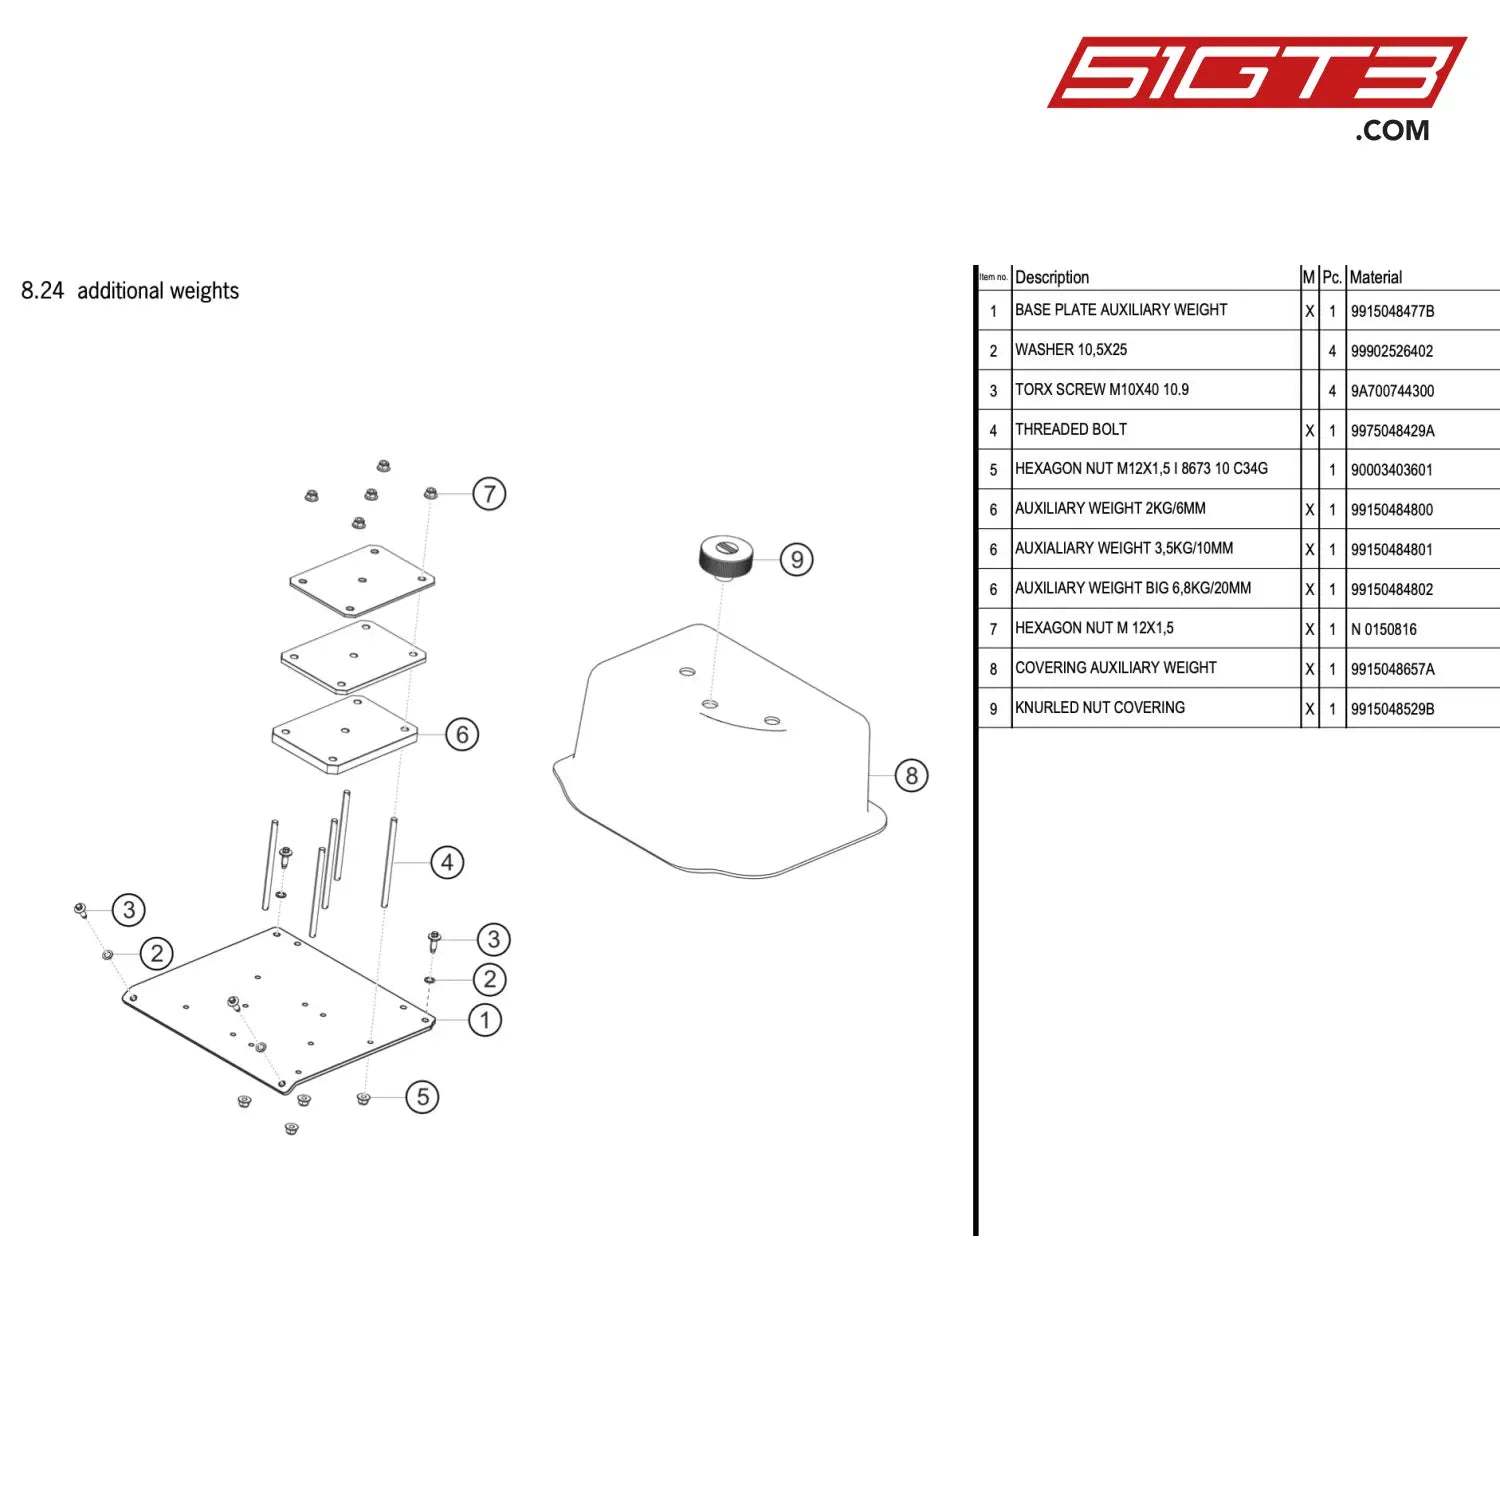 Base Plate Auxiliary Weight - 9915048477B [Porsche 911 Gt3 R Type 991 (Gen 2)] Additional Weights